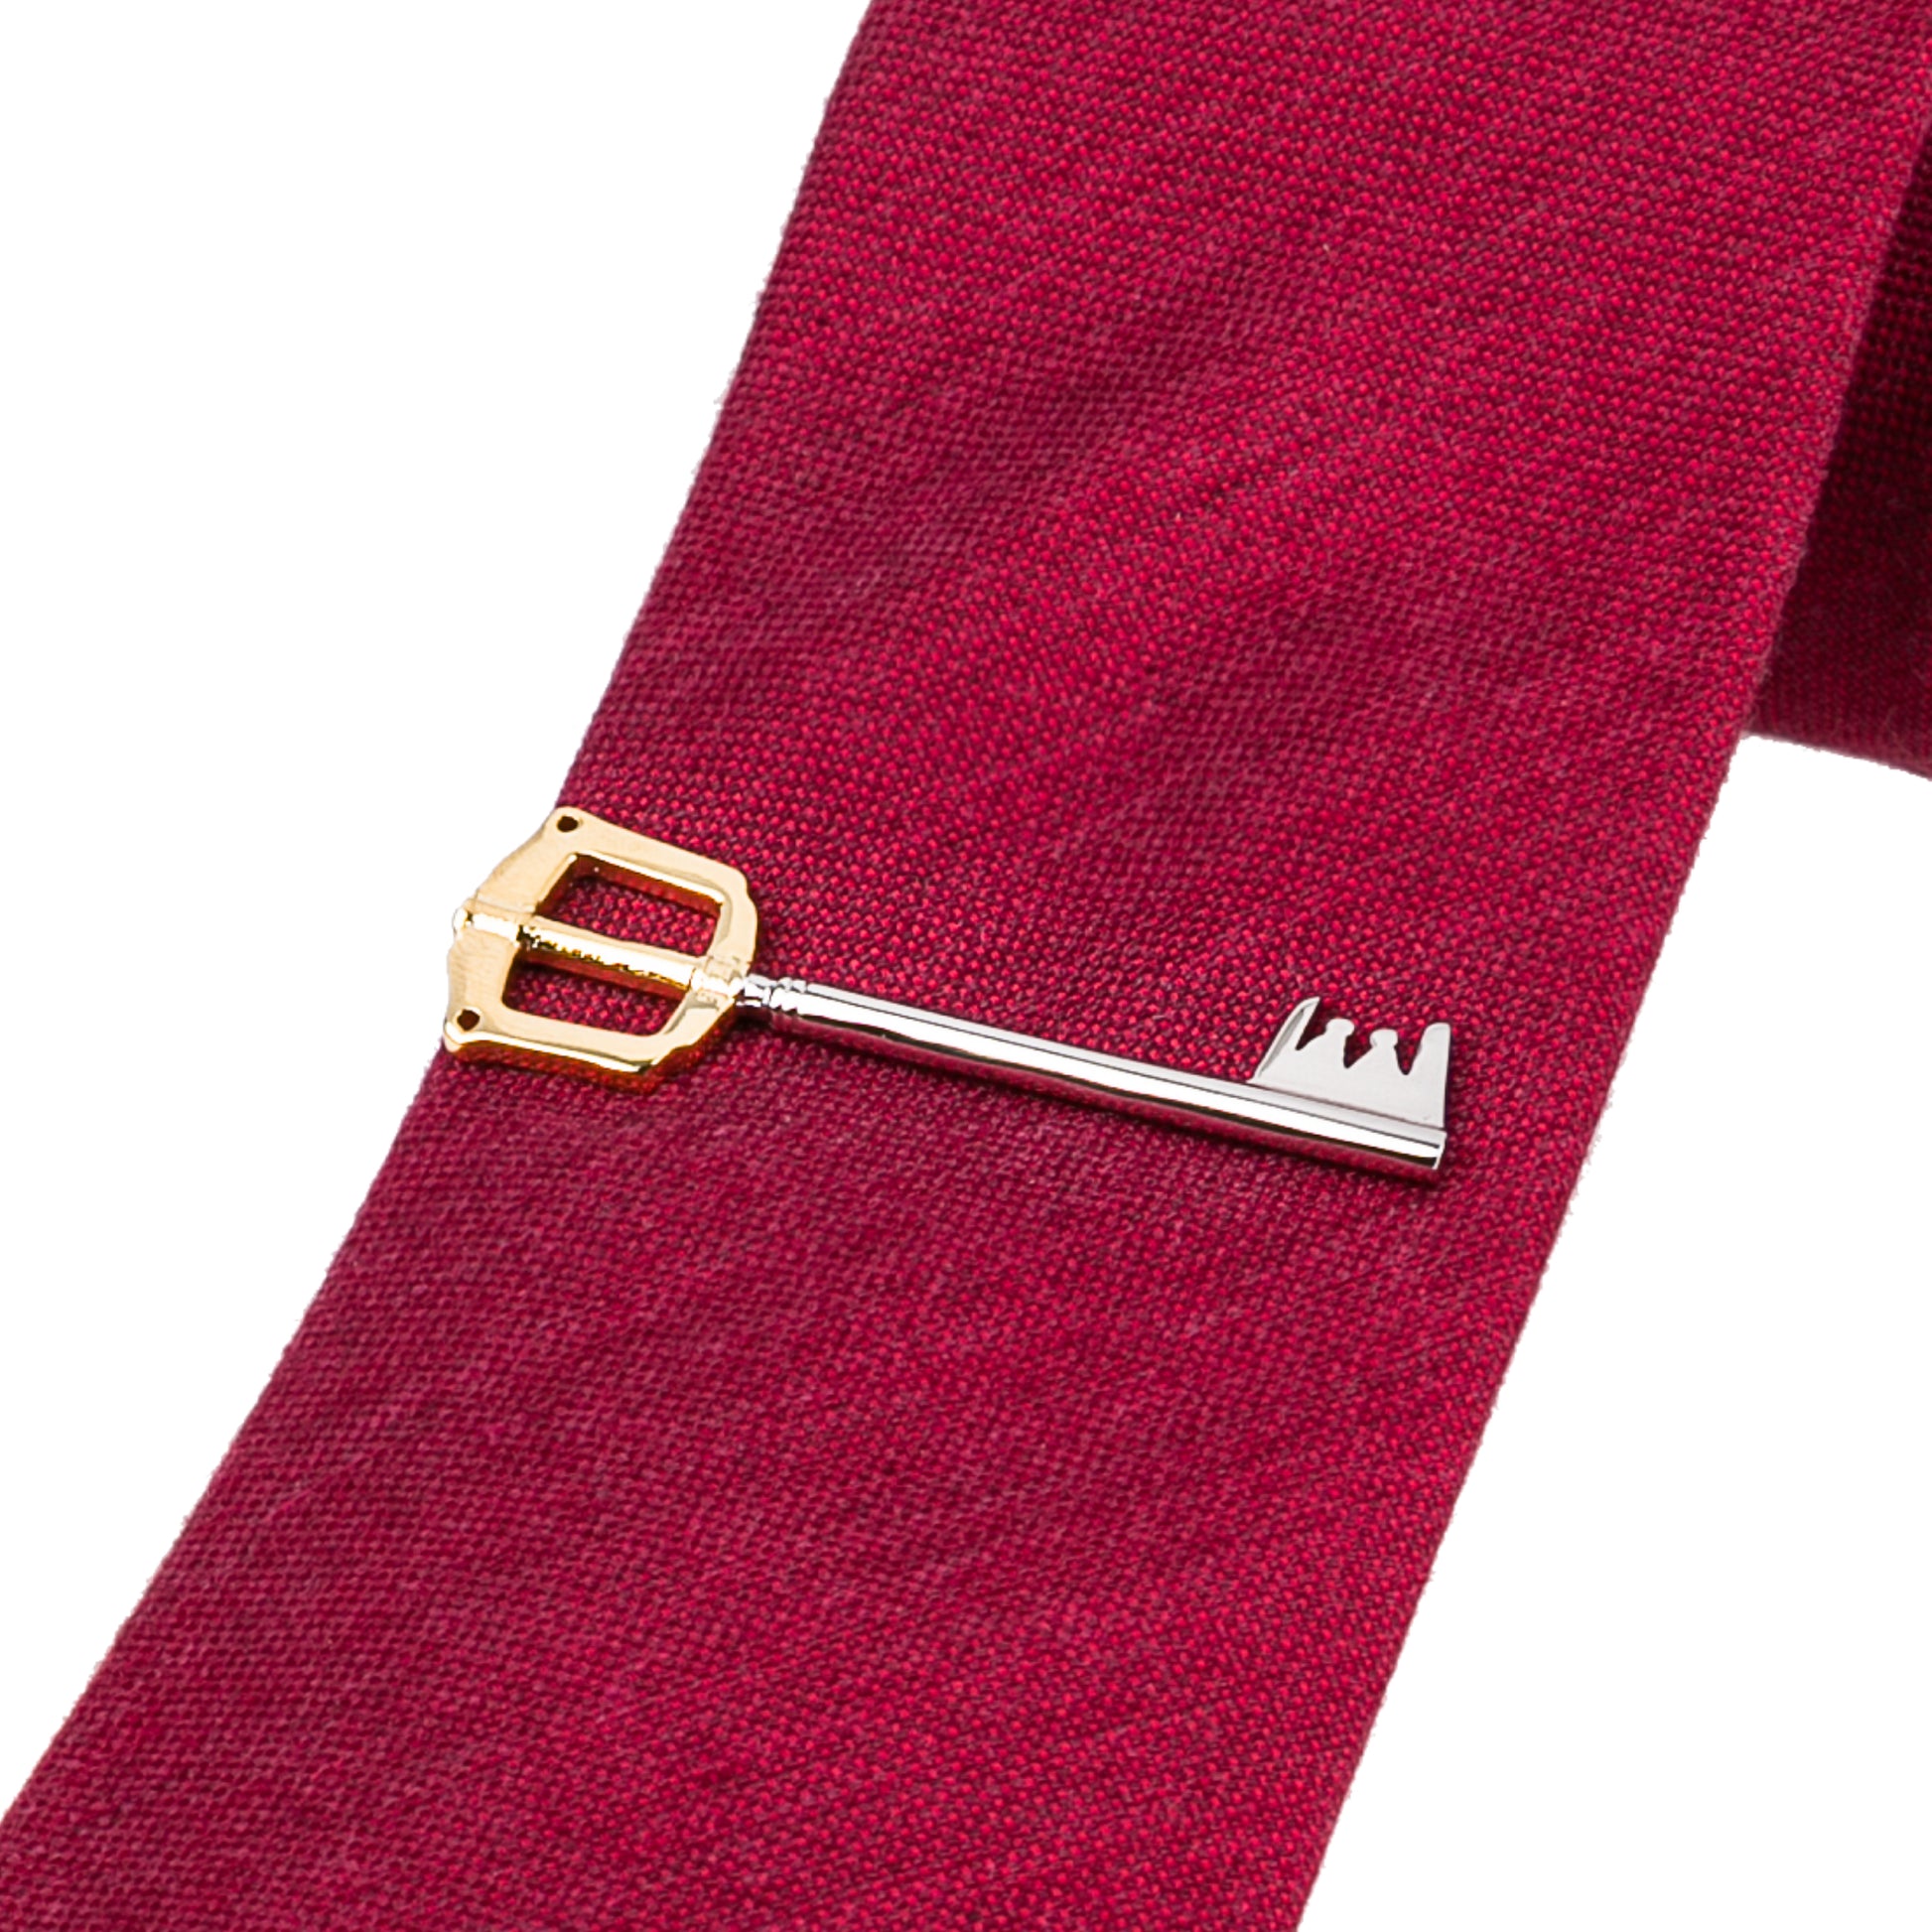 The Kingdom Key (Tie Clip)